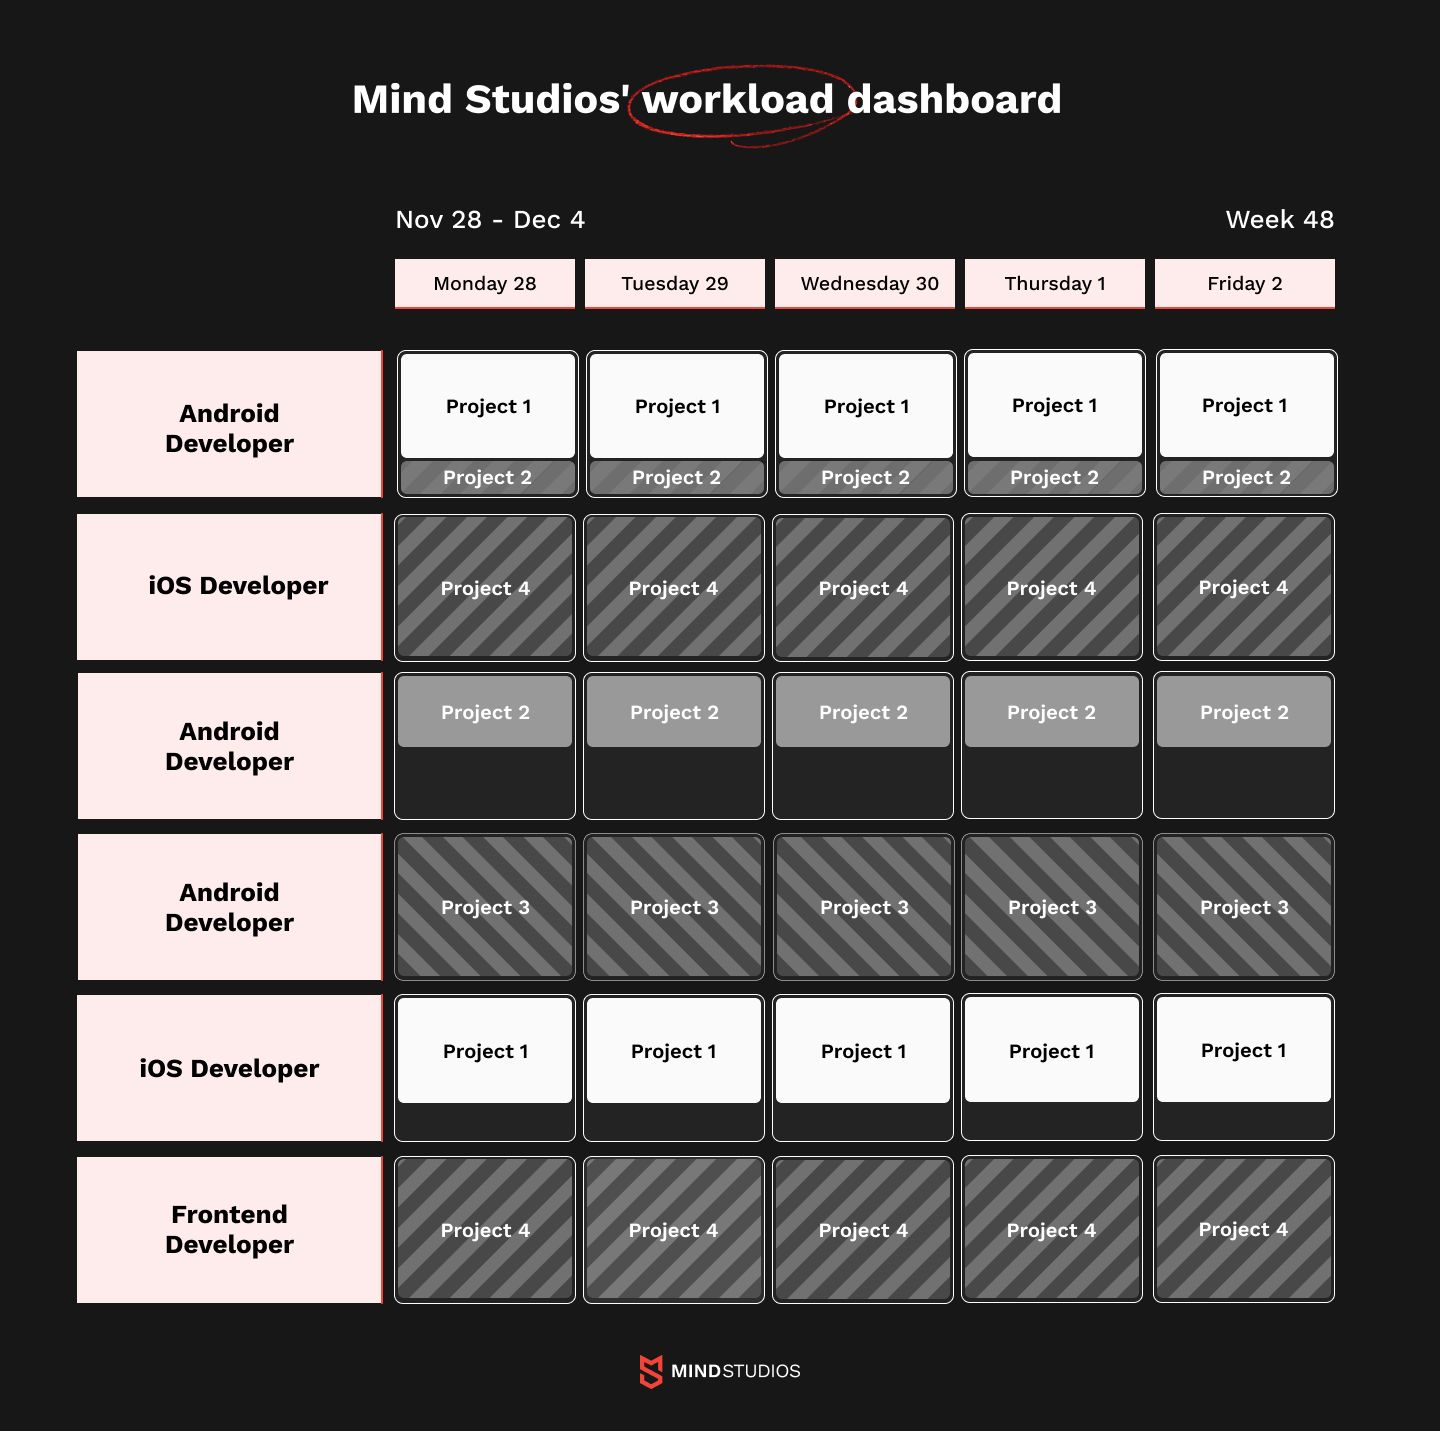 Mind Studios' workload dashboard